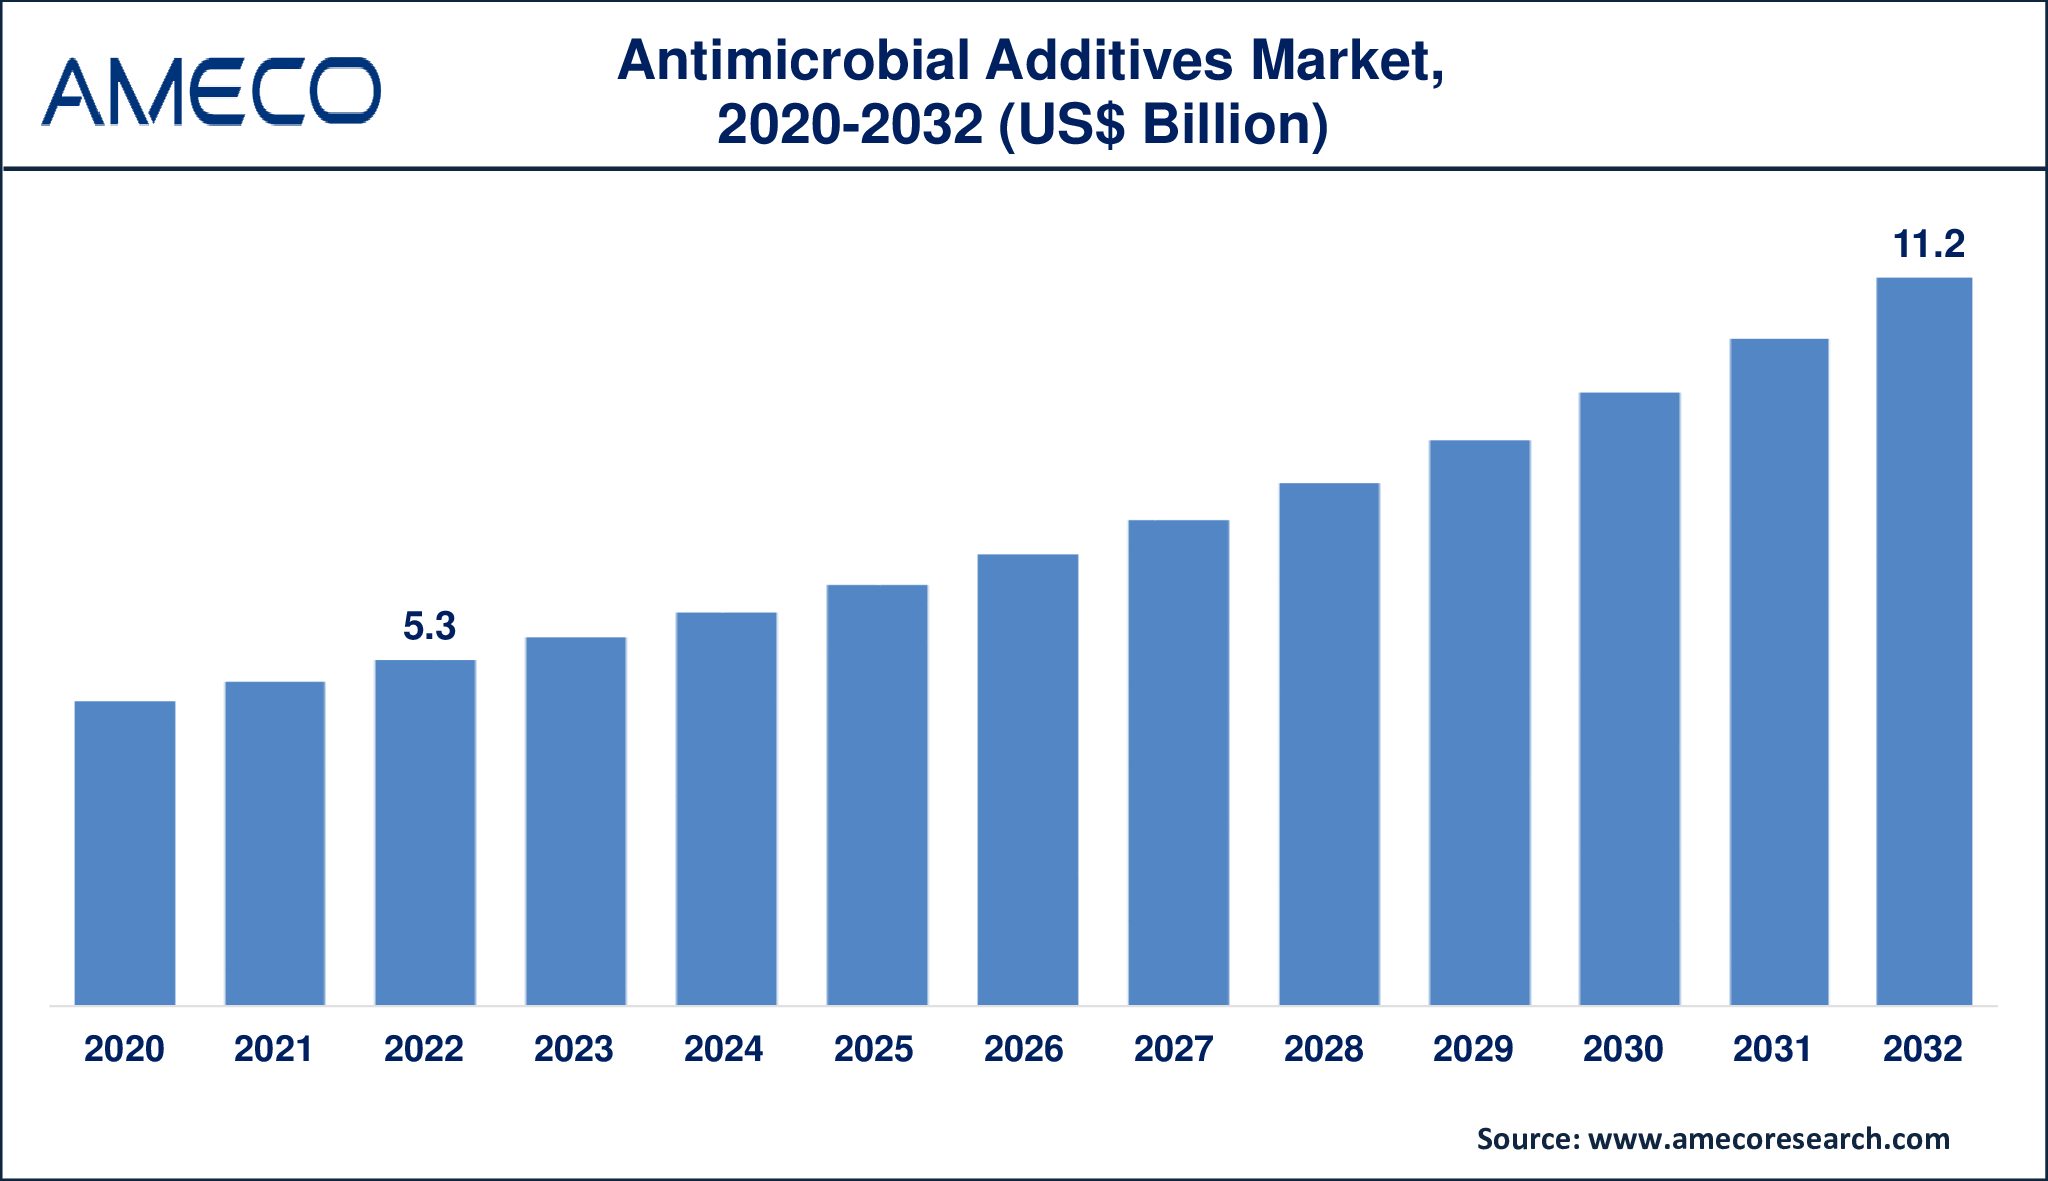 Antimicrobial Additives Market Dynamics